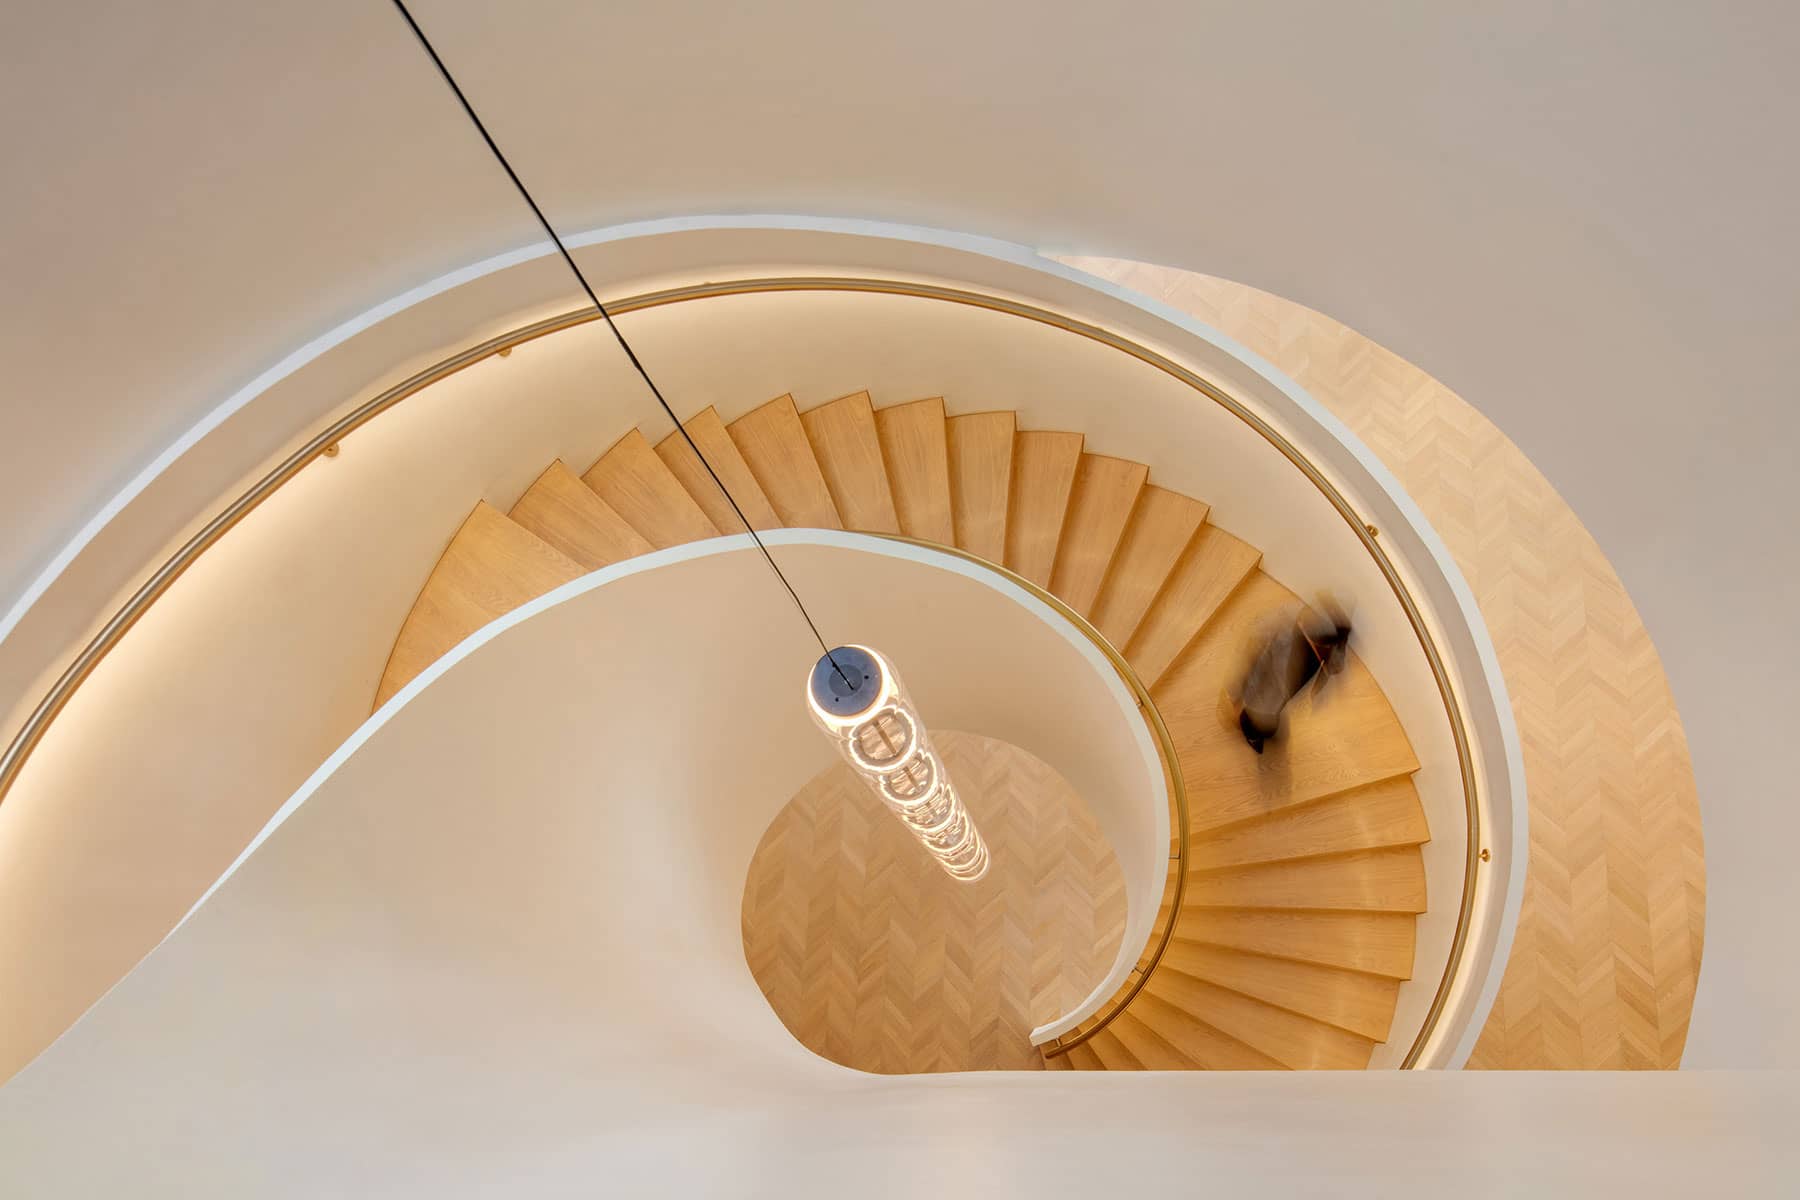 Architecture Photography Dubai: Spiral Staircase at Staybridge Suites, Media City Dubai.